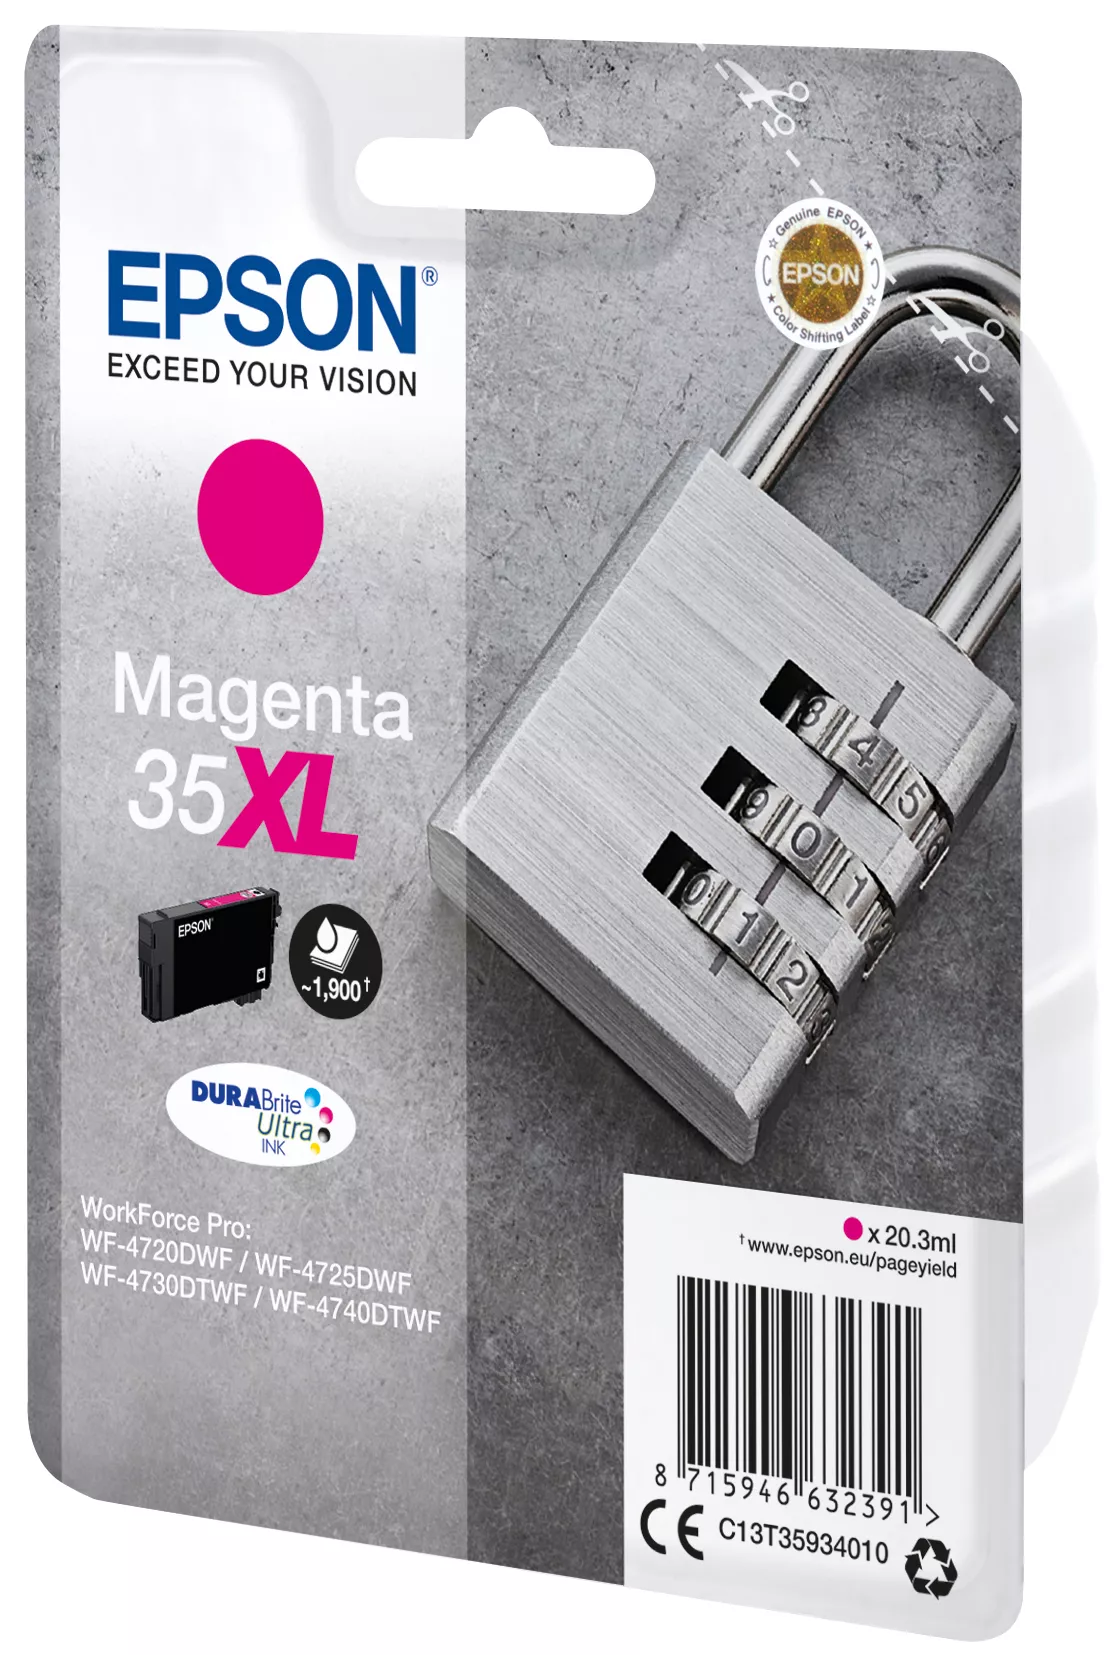 Vente EPSON Cartouche Cadenas - Encre DURABrite Ultra M Epson au meilleur prix - visuel 2